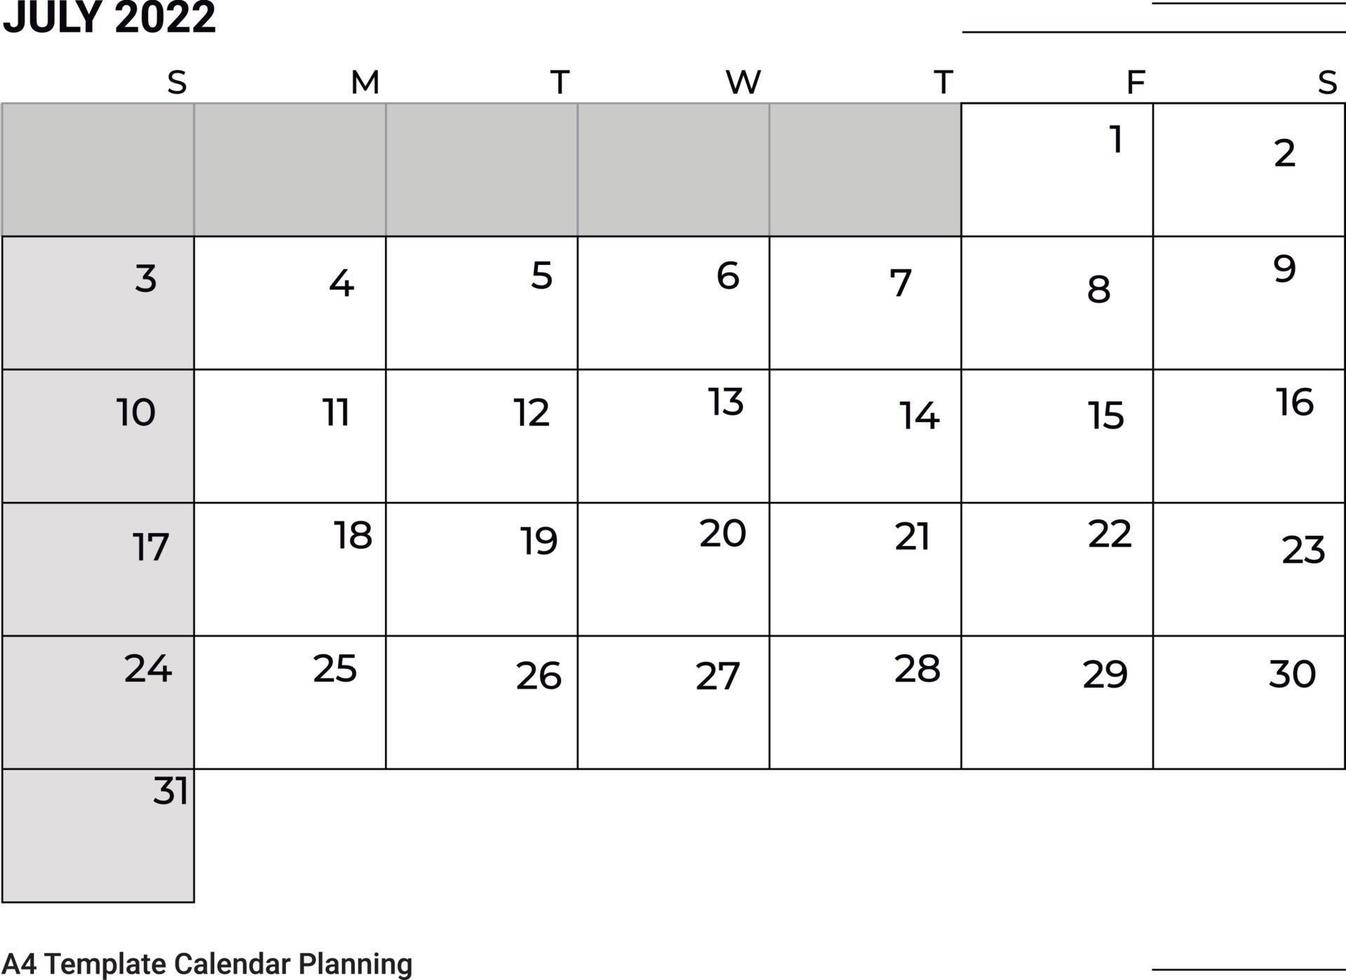 July 2022 Planning Calendar vector